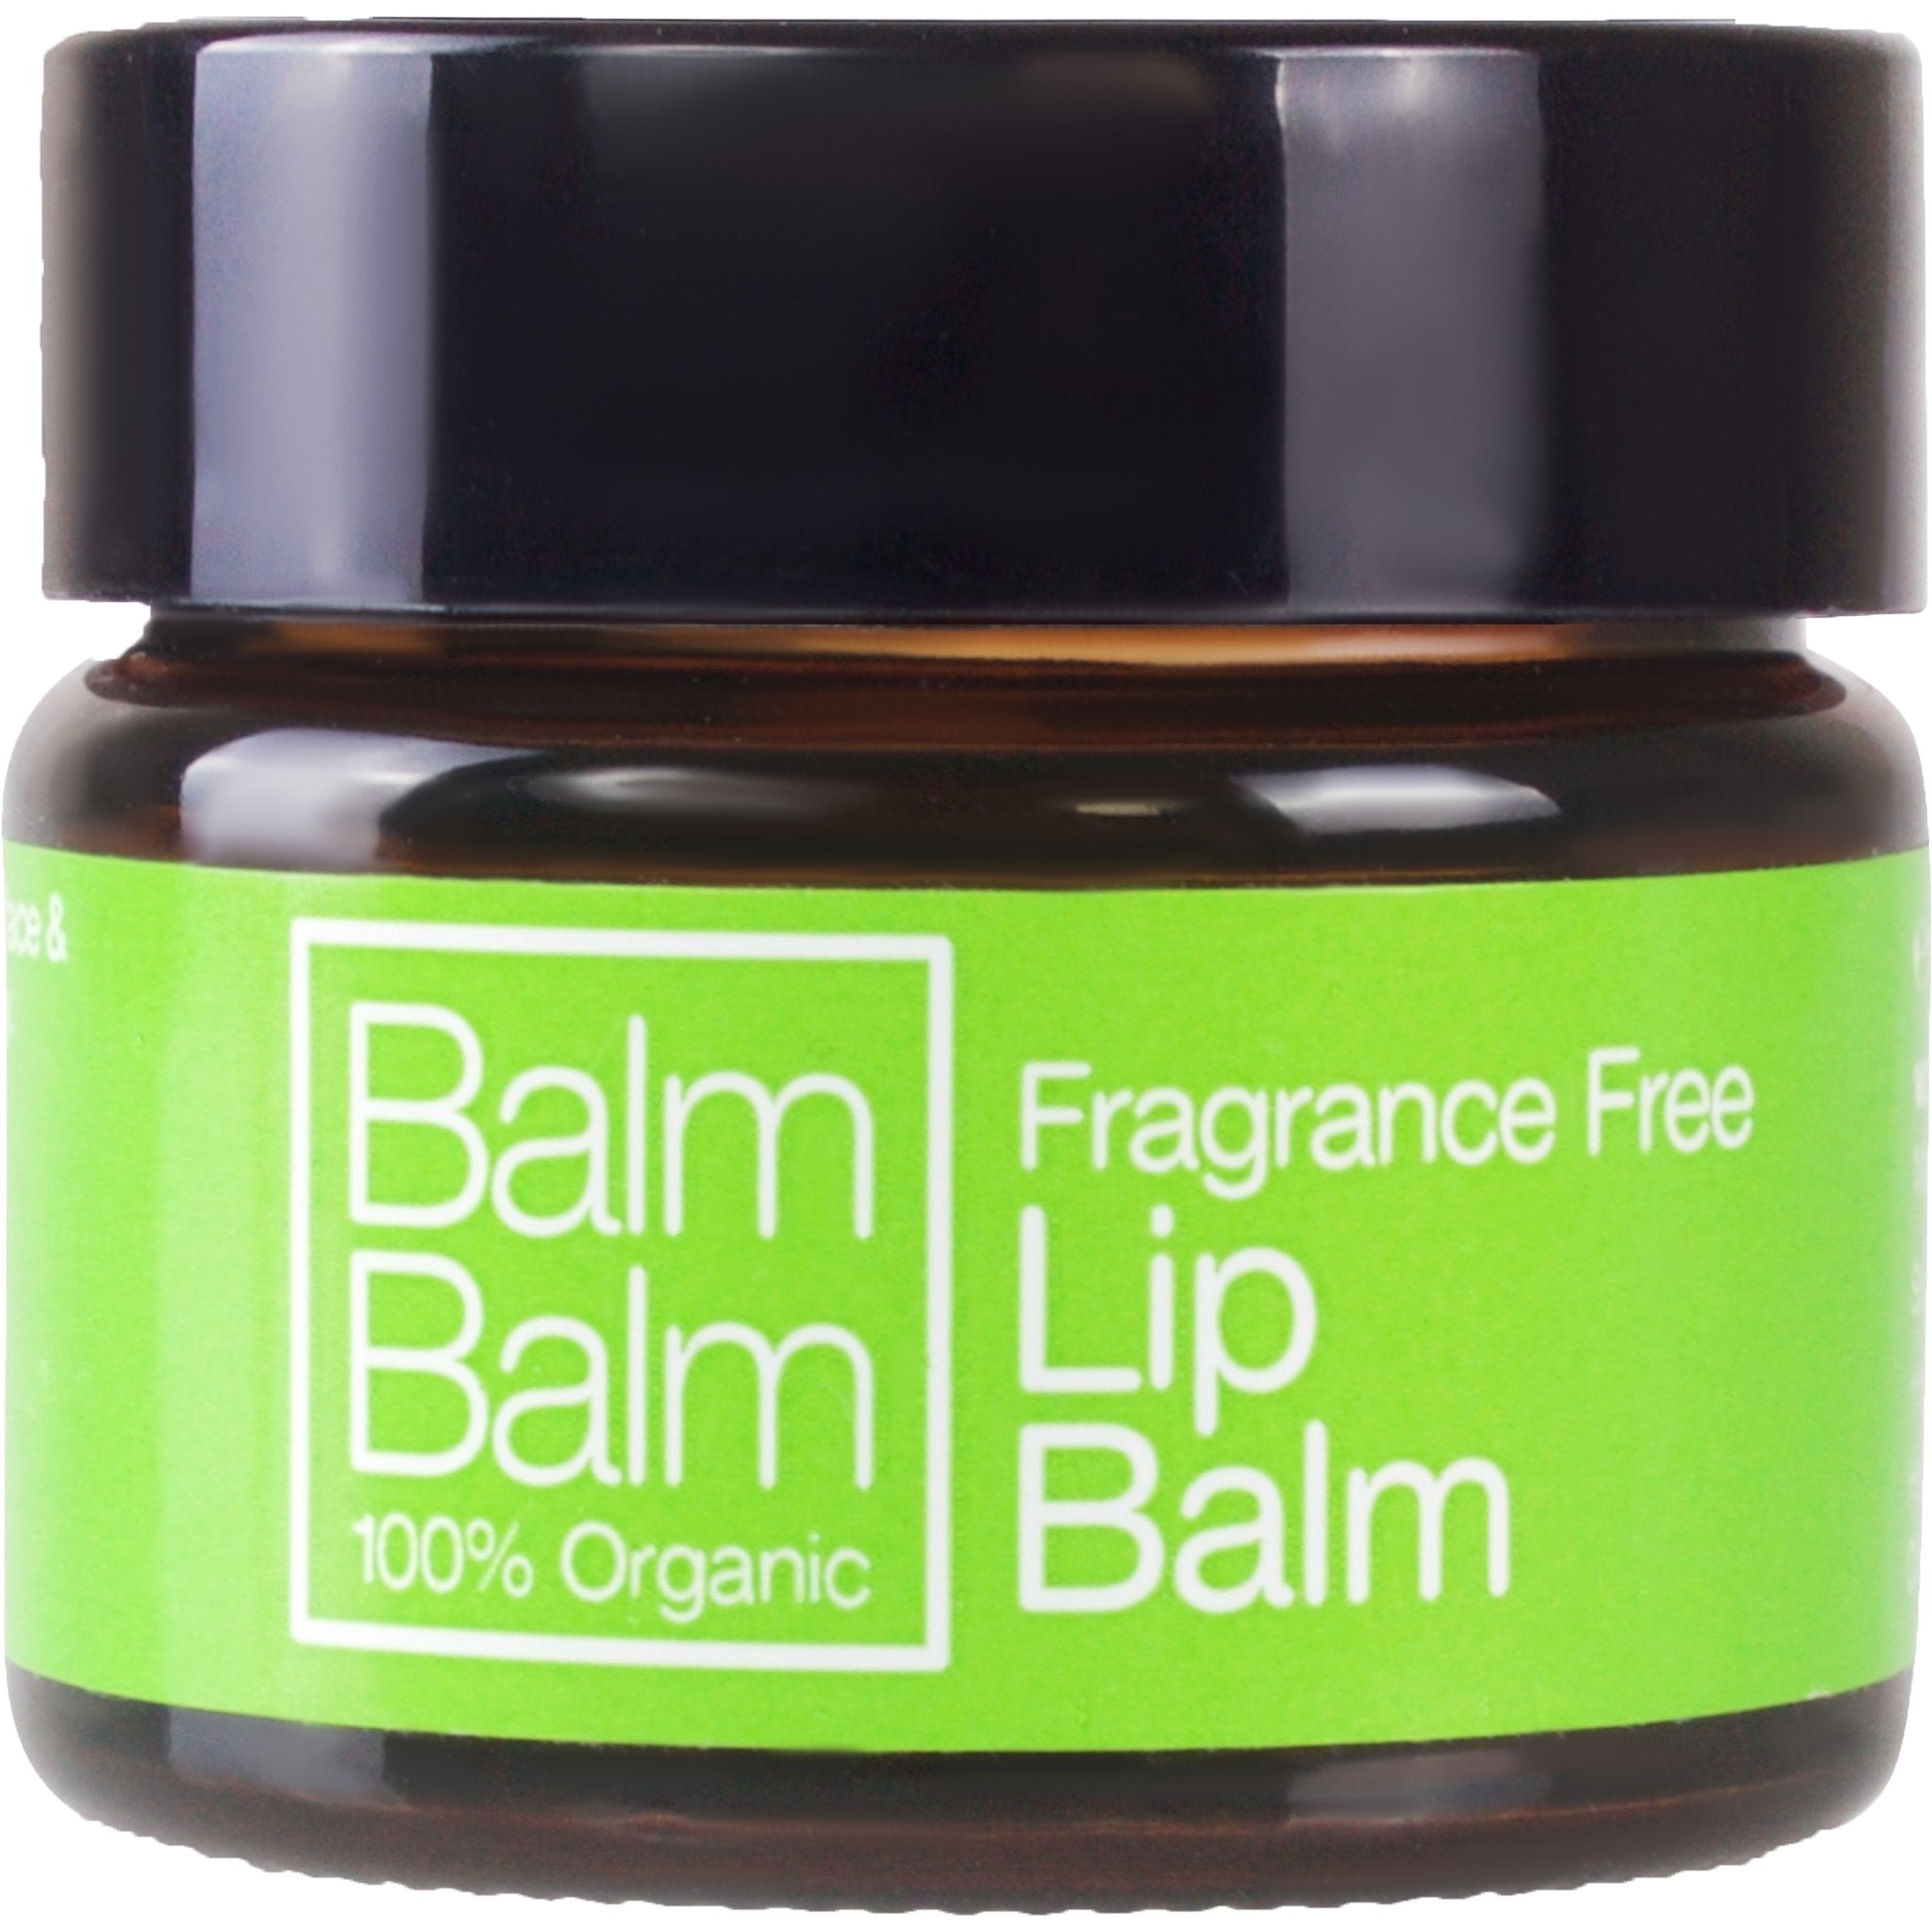 Fragrance Free Lip Balm - mypure.co.uk